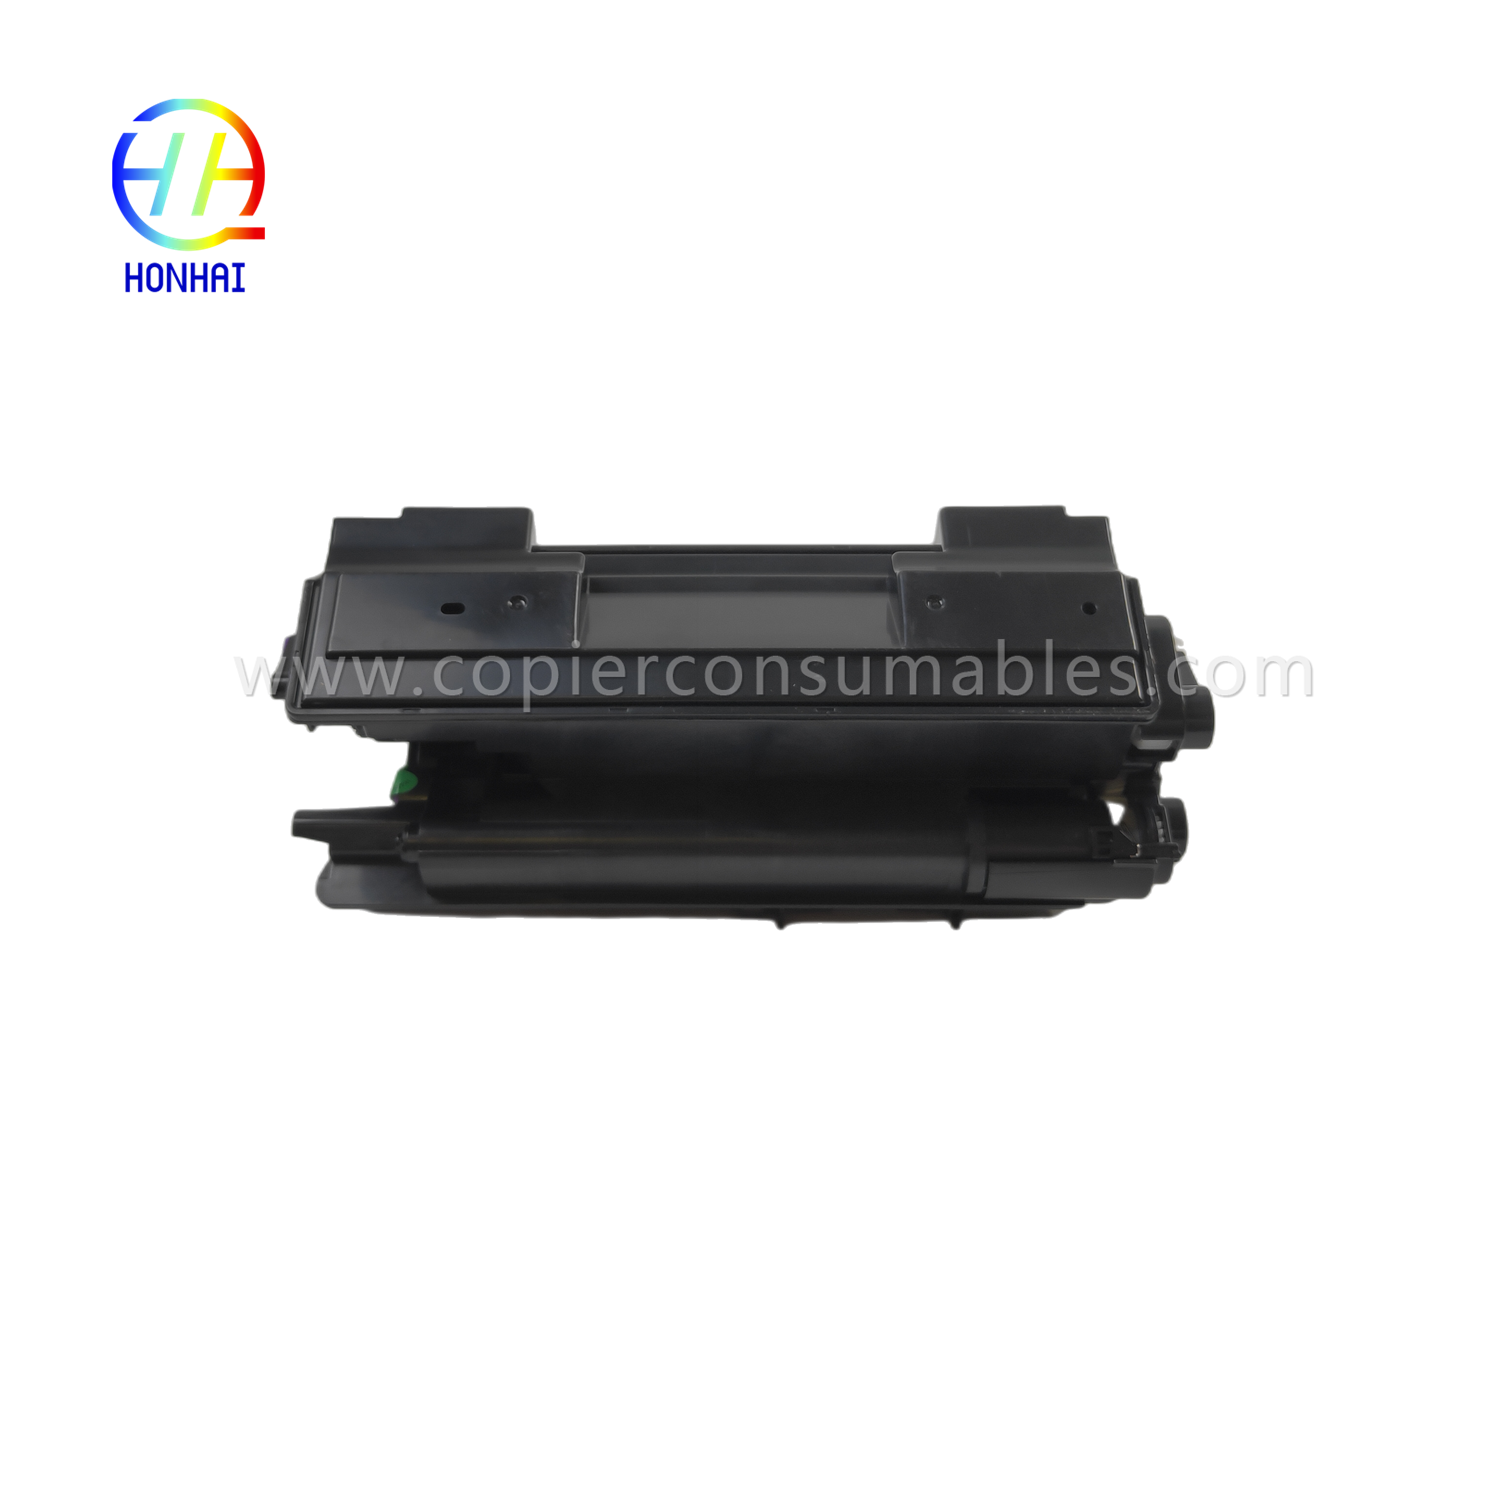 https://www.copierconsumables.com/toner-cartridge-black-for-ricoh-407318-sp-4510dn-4510sf-product/